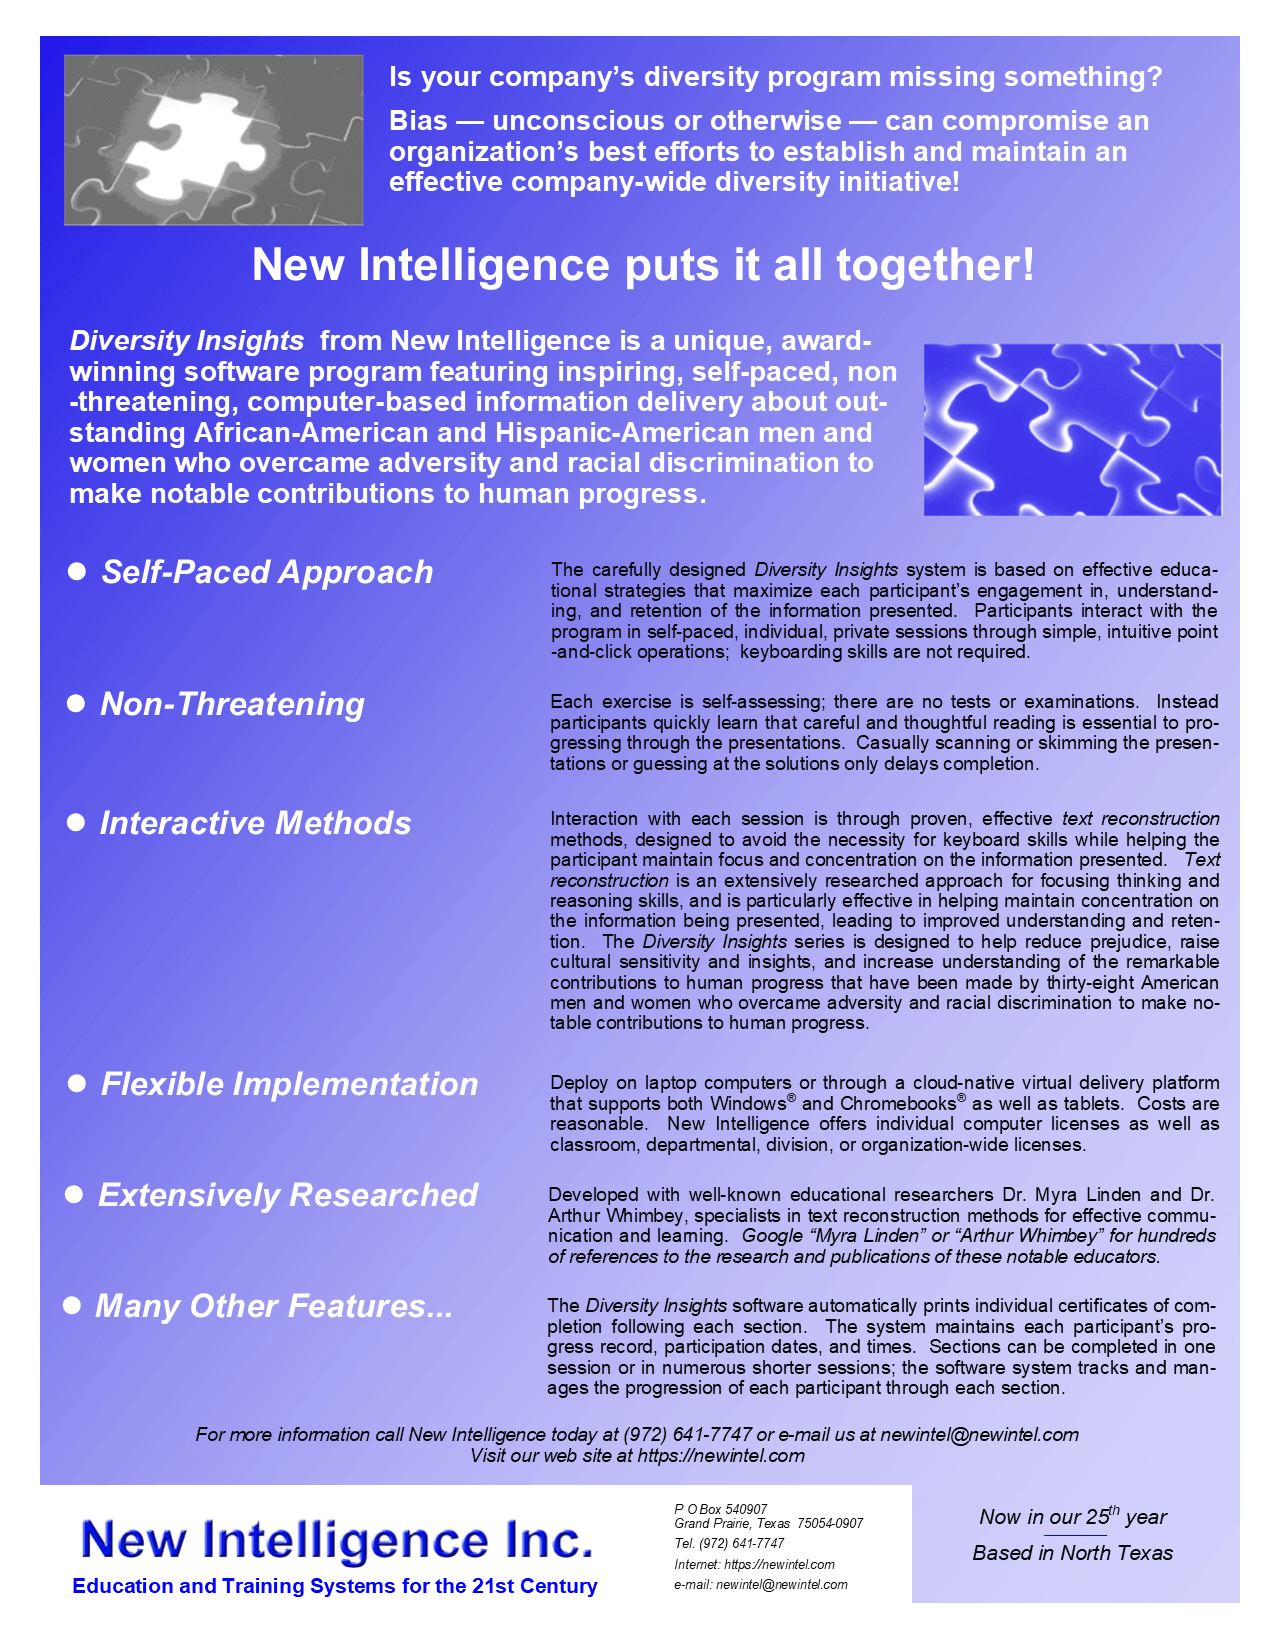 New Intelligence Inc. - Div Insights